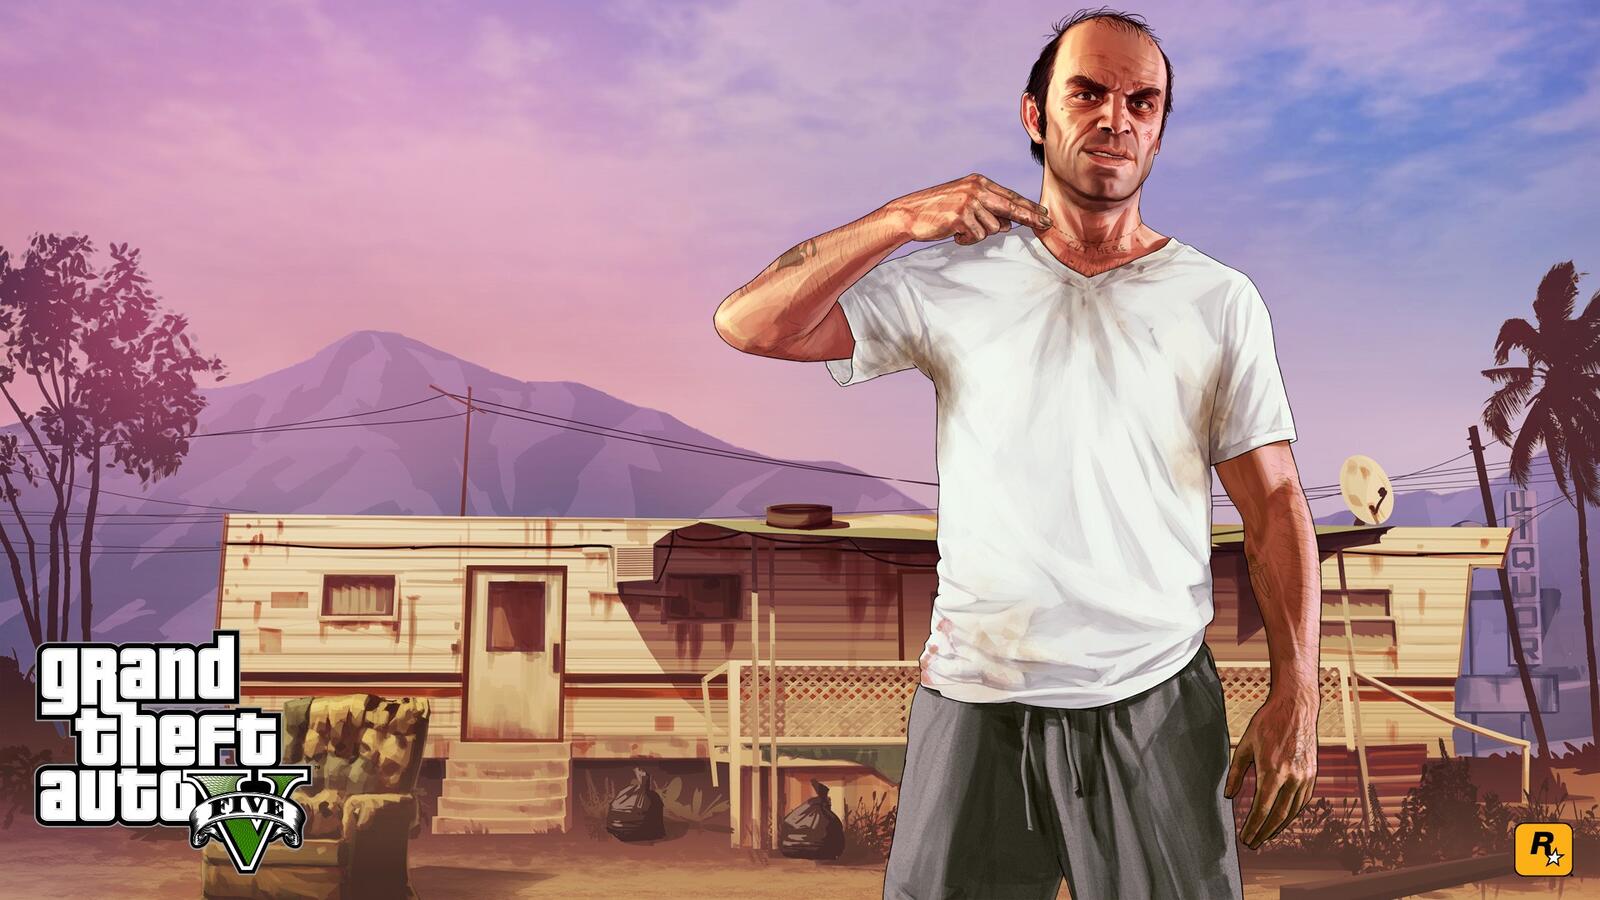 Бесплатное фото Grand Theft Auto V для заставки на пк